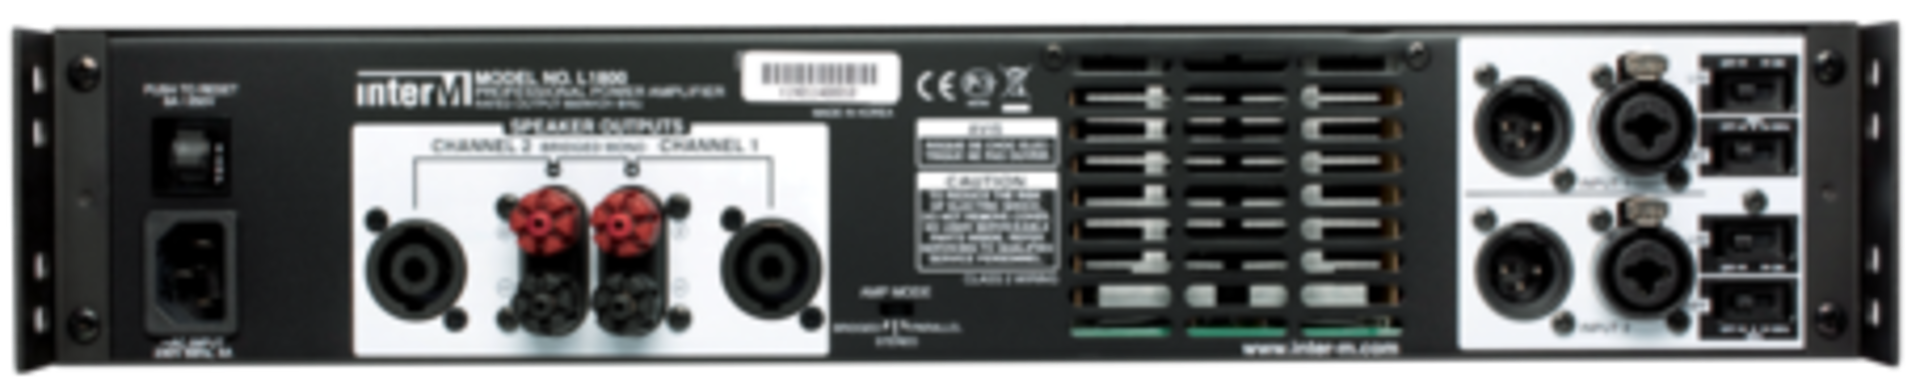 1 x InterM L2400 Power Amplifer In Hard Gator Case - Ref: 101 - CL581 - Location: Altrincham - Image 2 of 2